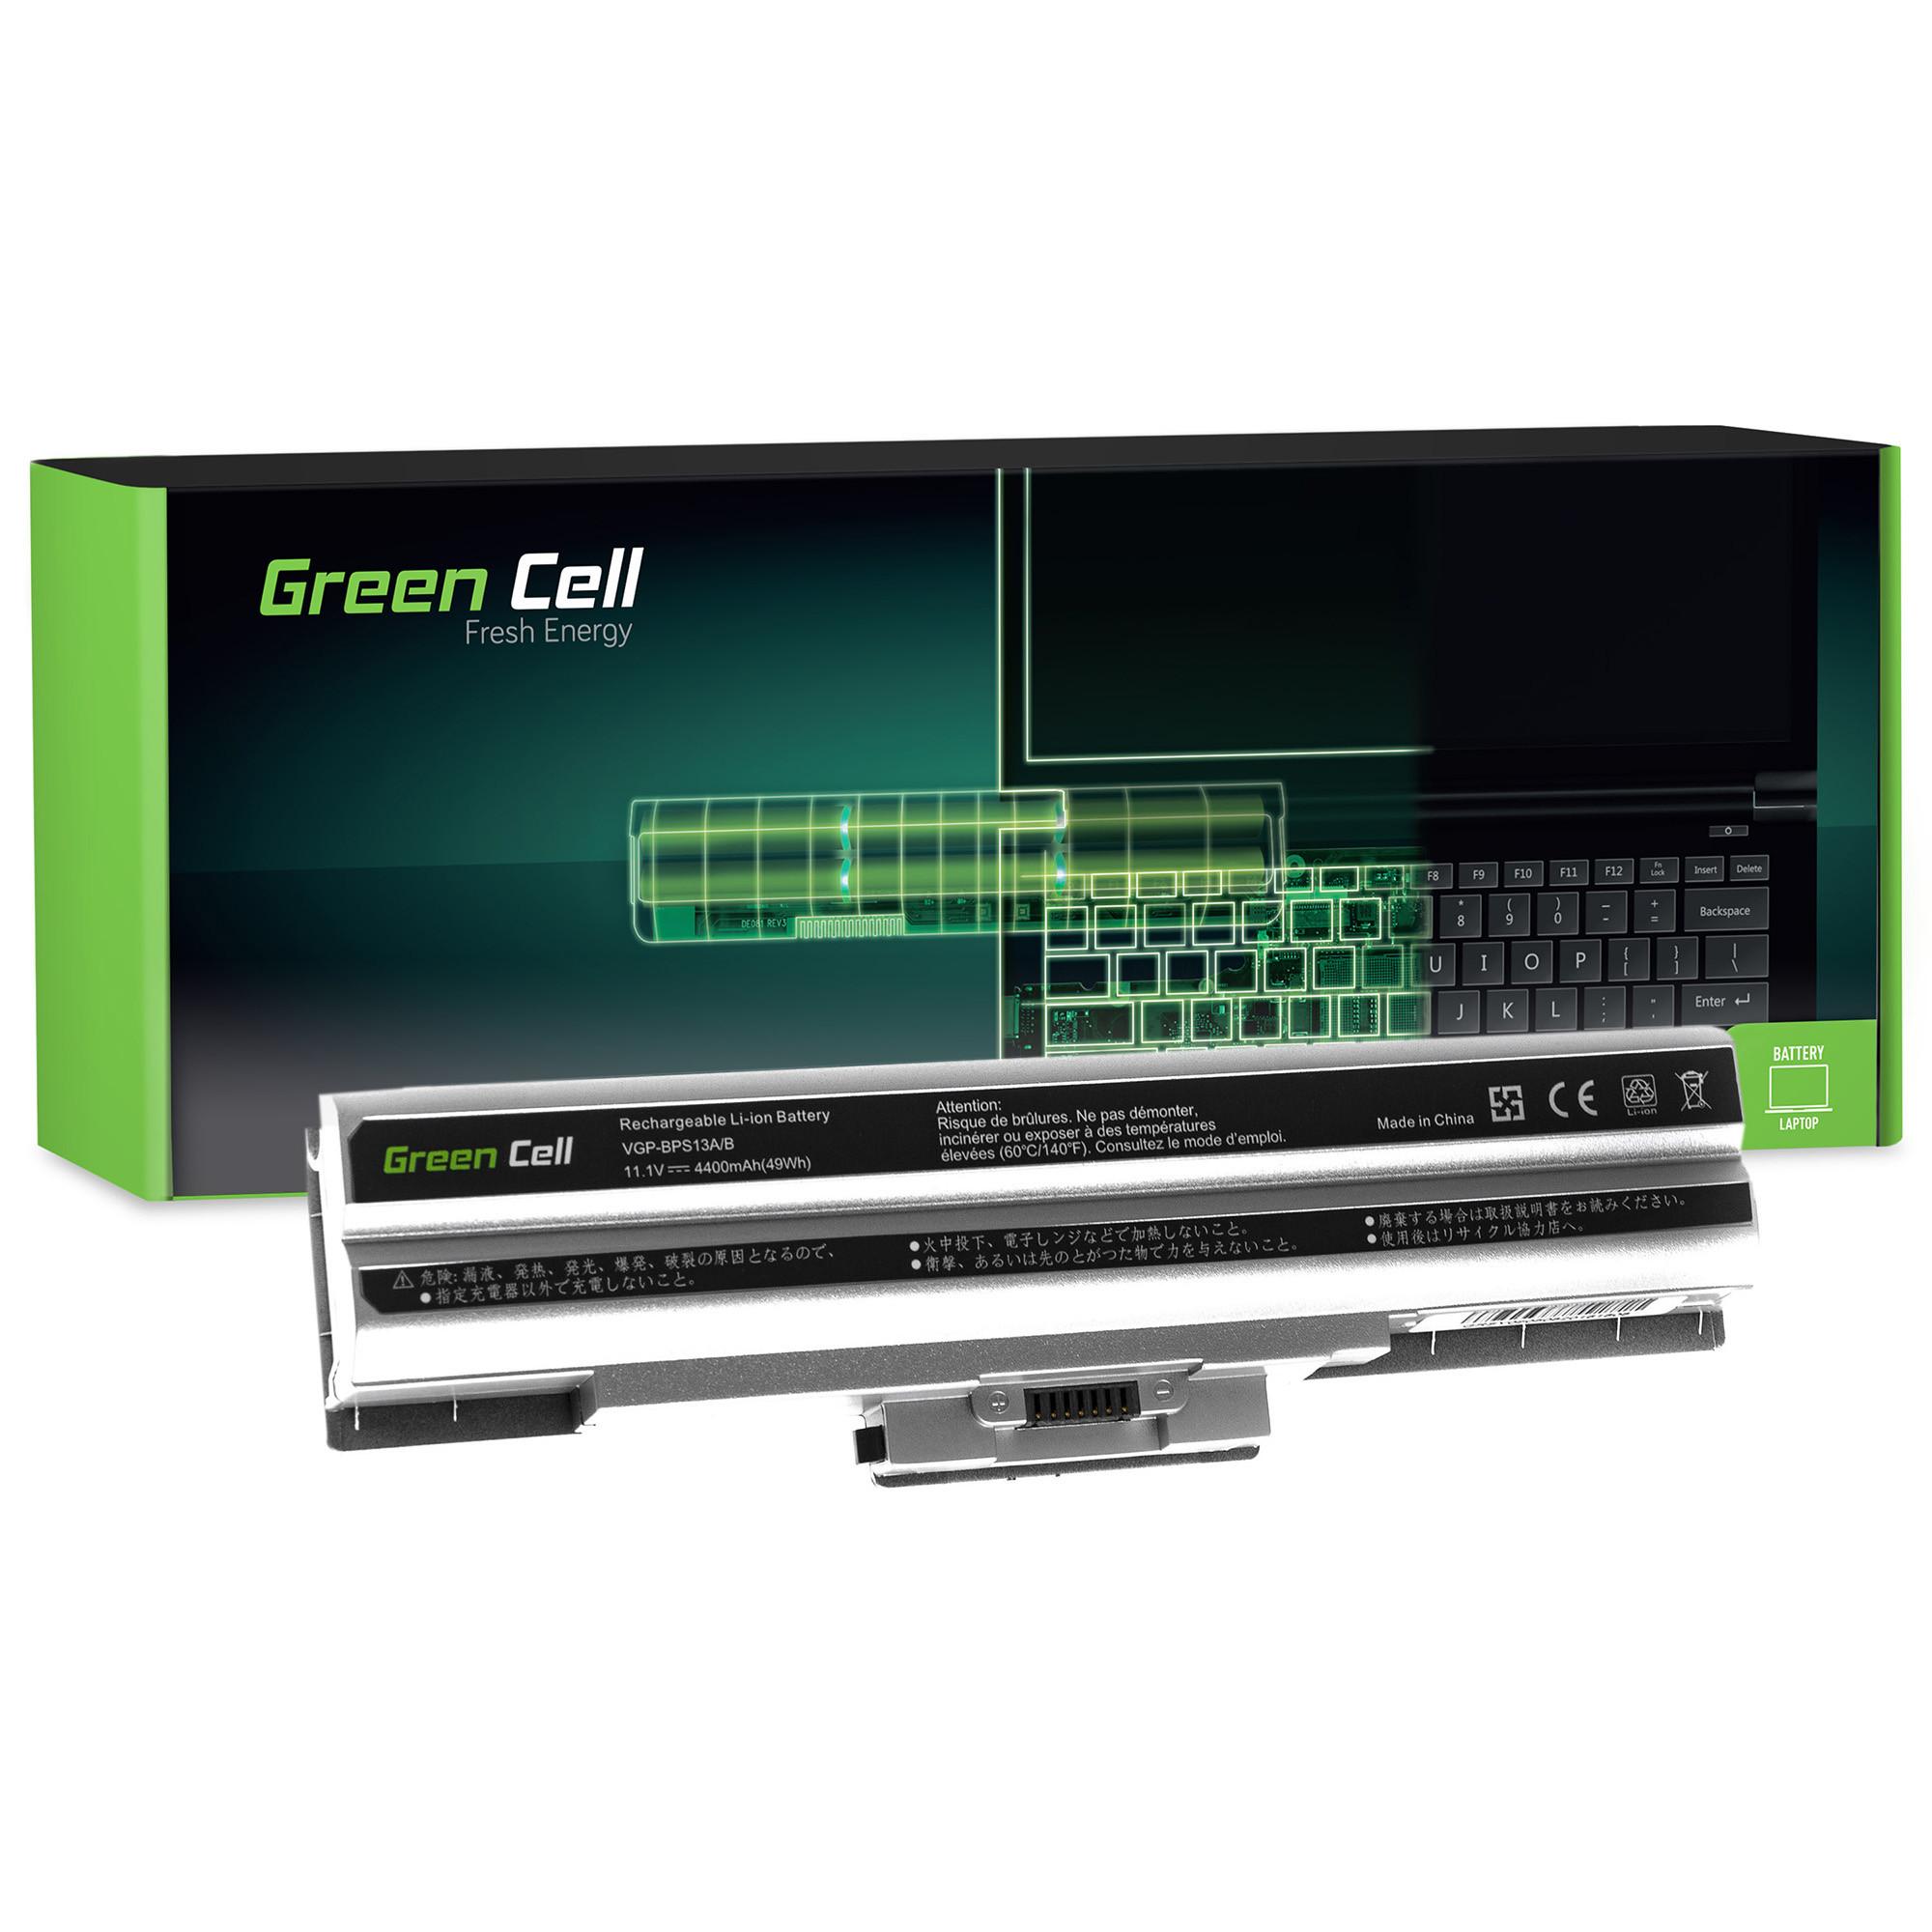 Green Cell Baterie VGP-BPS13 VGP-BPS21A VGP-BPS21B pro Sony Vaio VGN-FW PCG-31311M 3C1M 81112M 81212M (Silver) SY05